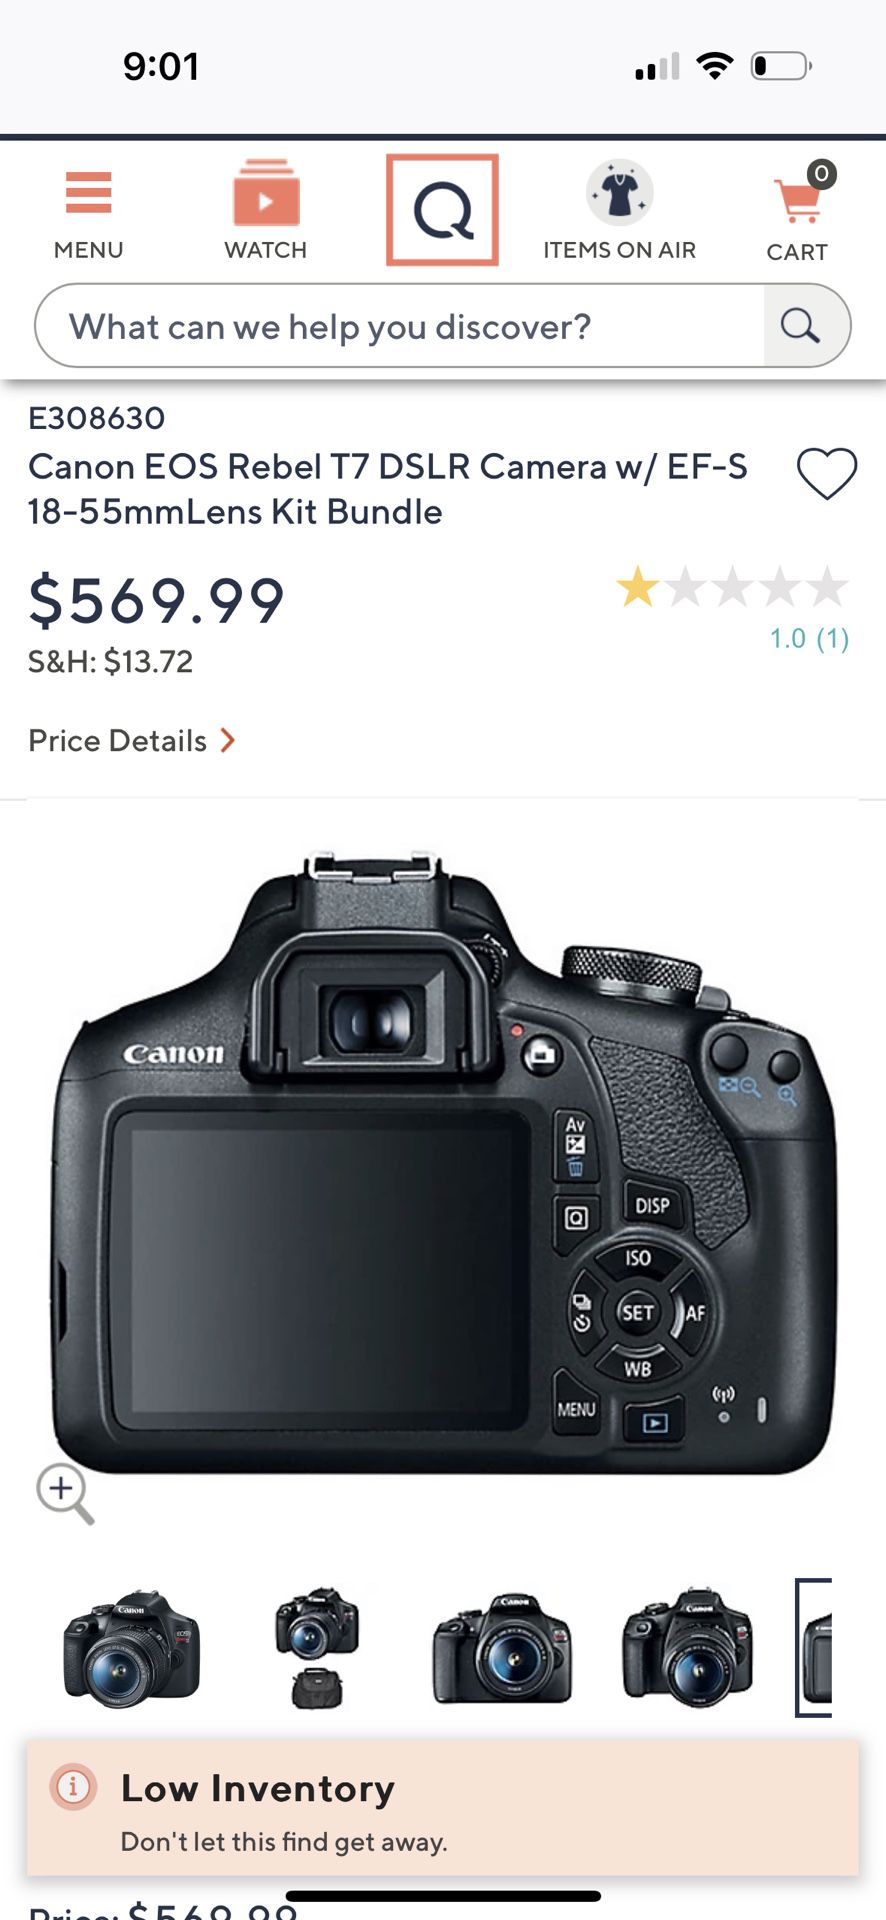 Canon EOS Rebel T7 DSLR Camera w/ EF-S 18-55mmLens Kit Bundle